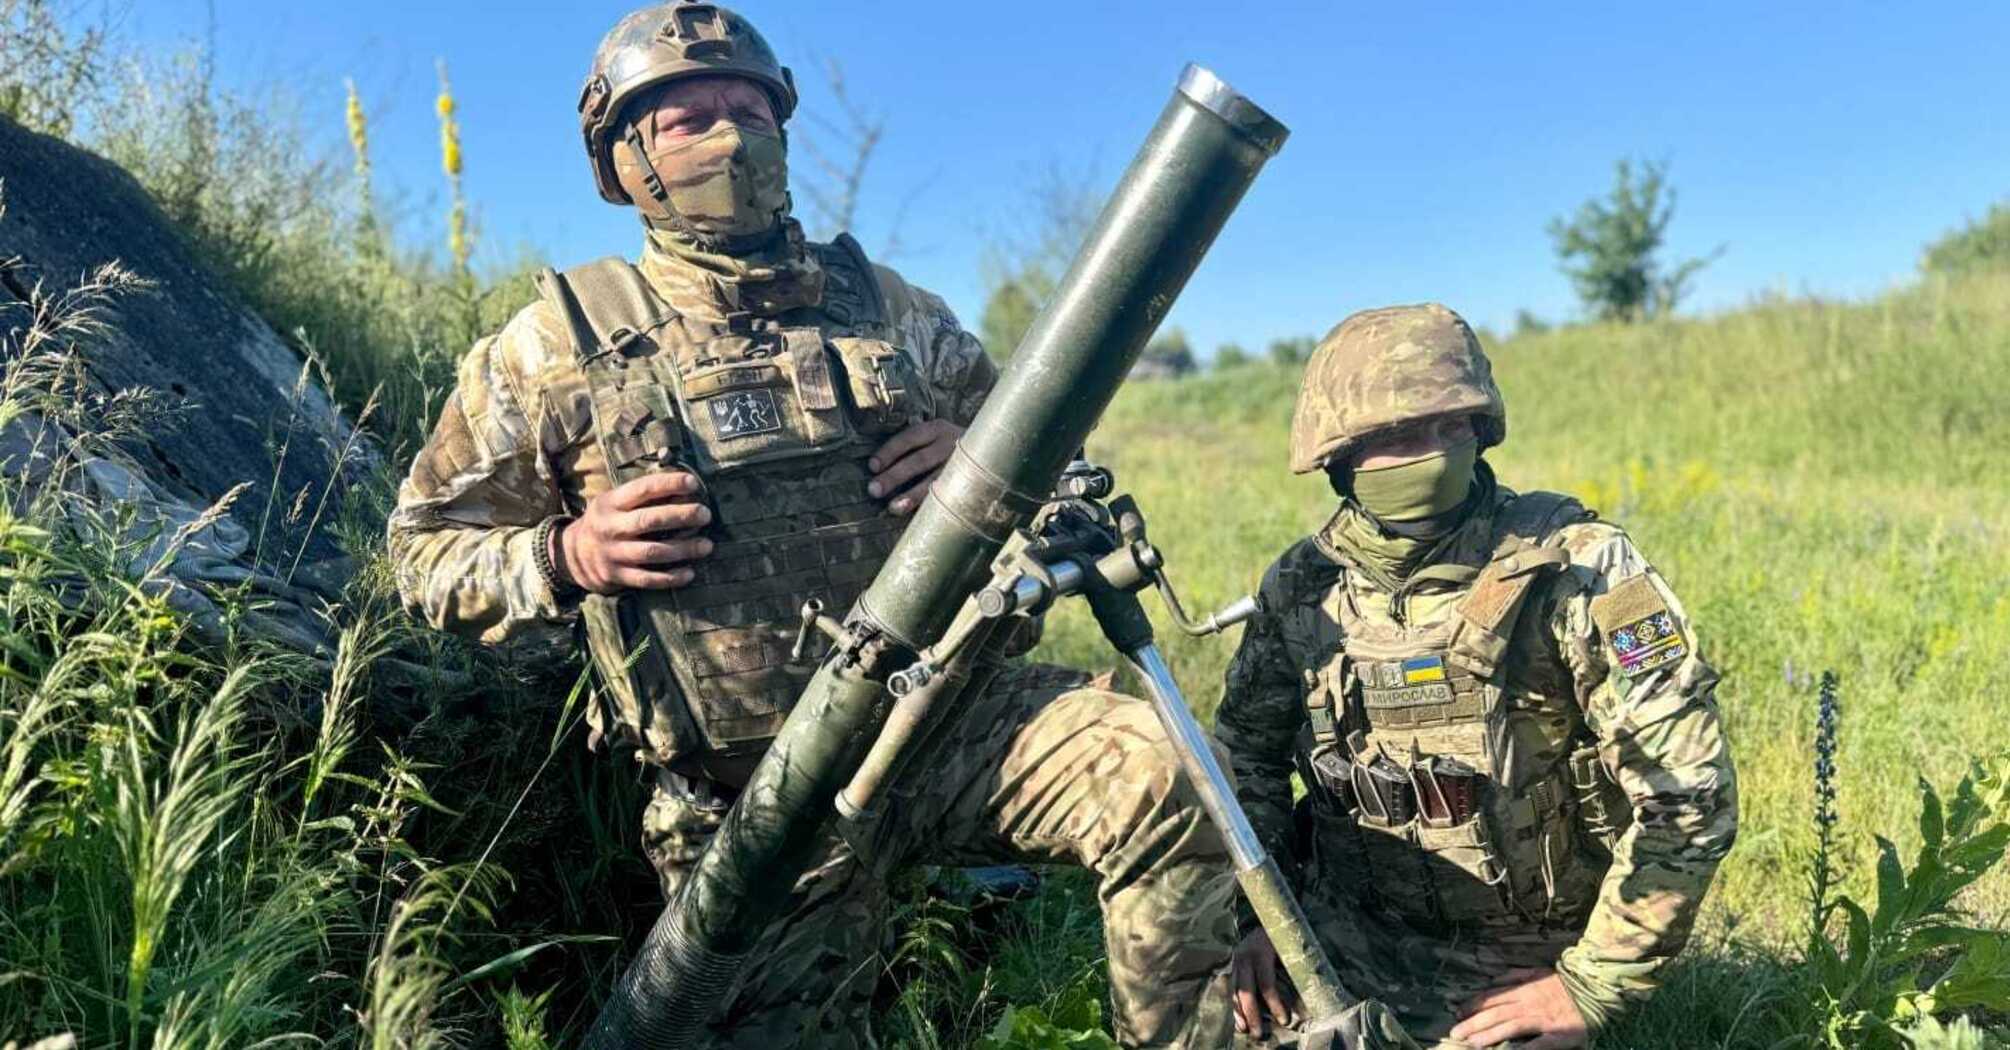 Occupants are trying to seize Chasovyi Yar, Klishchiyivka and Kalynivka in Donetsk Oblast: Khortytsia military unit reports on the situation